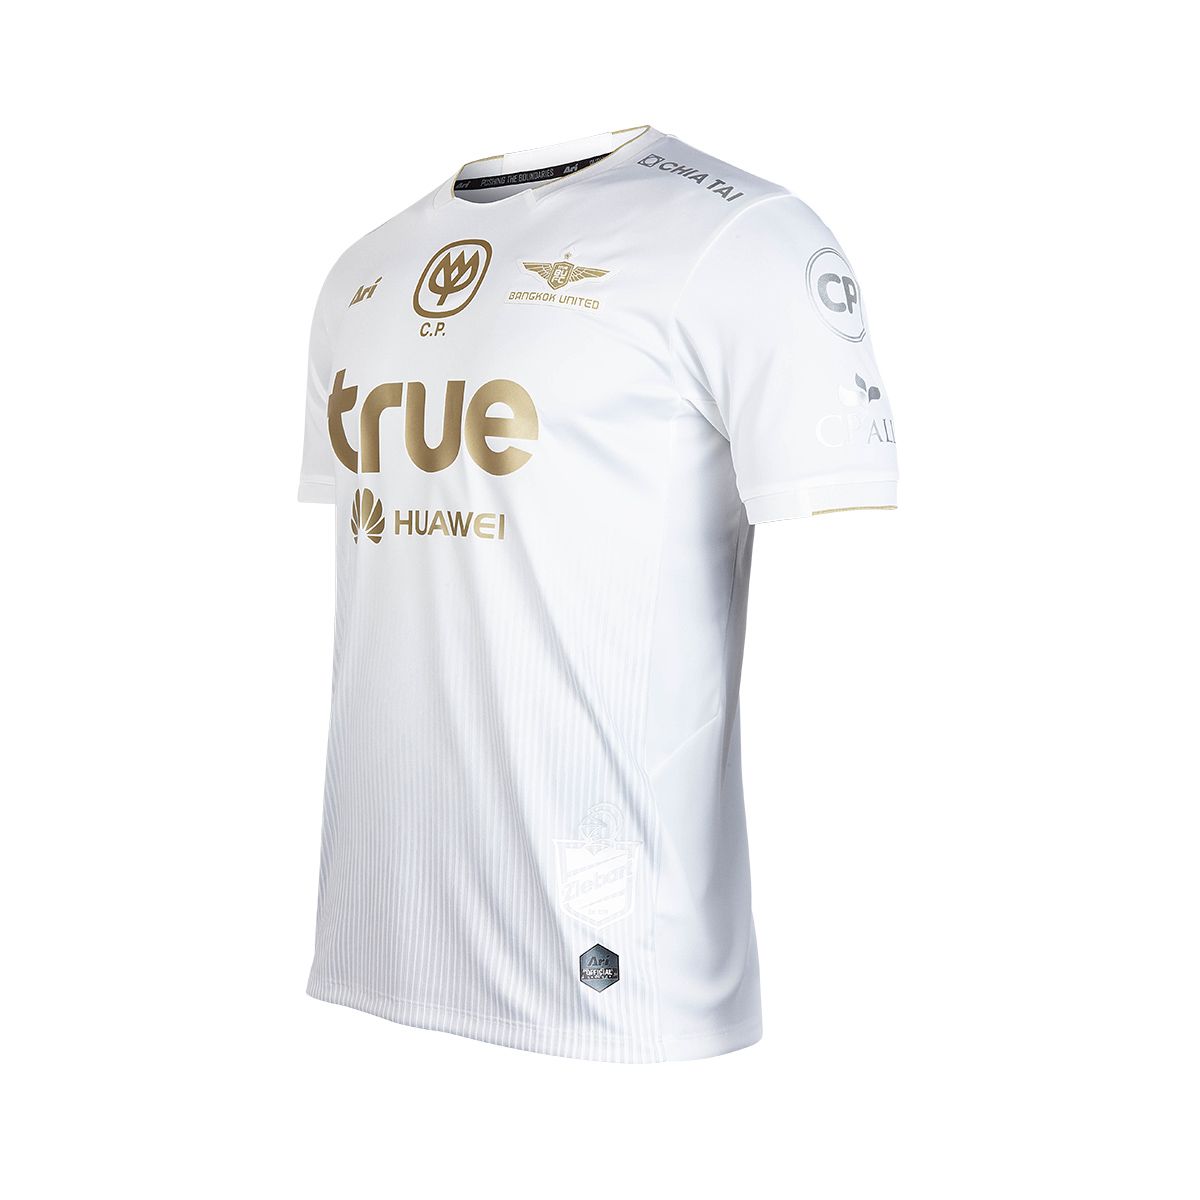 100% Authentic Bangkok United Thailand Football Soccer League Jersey Shirt White